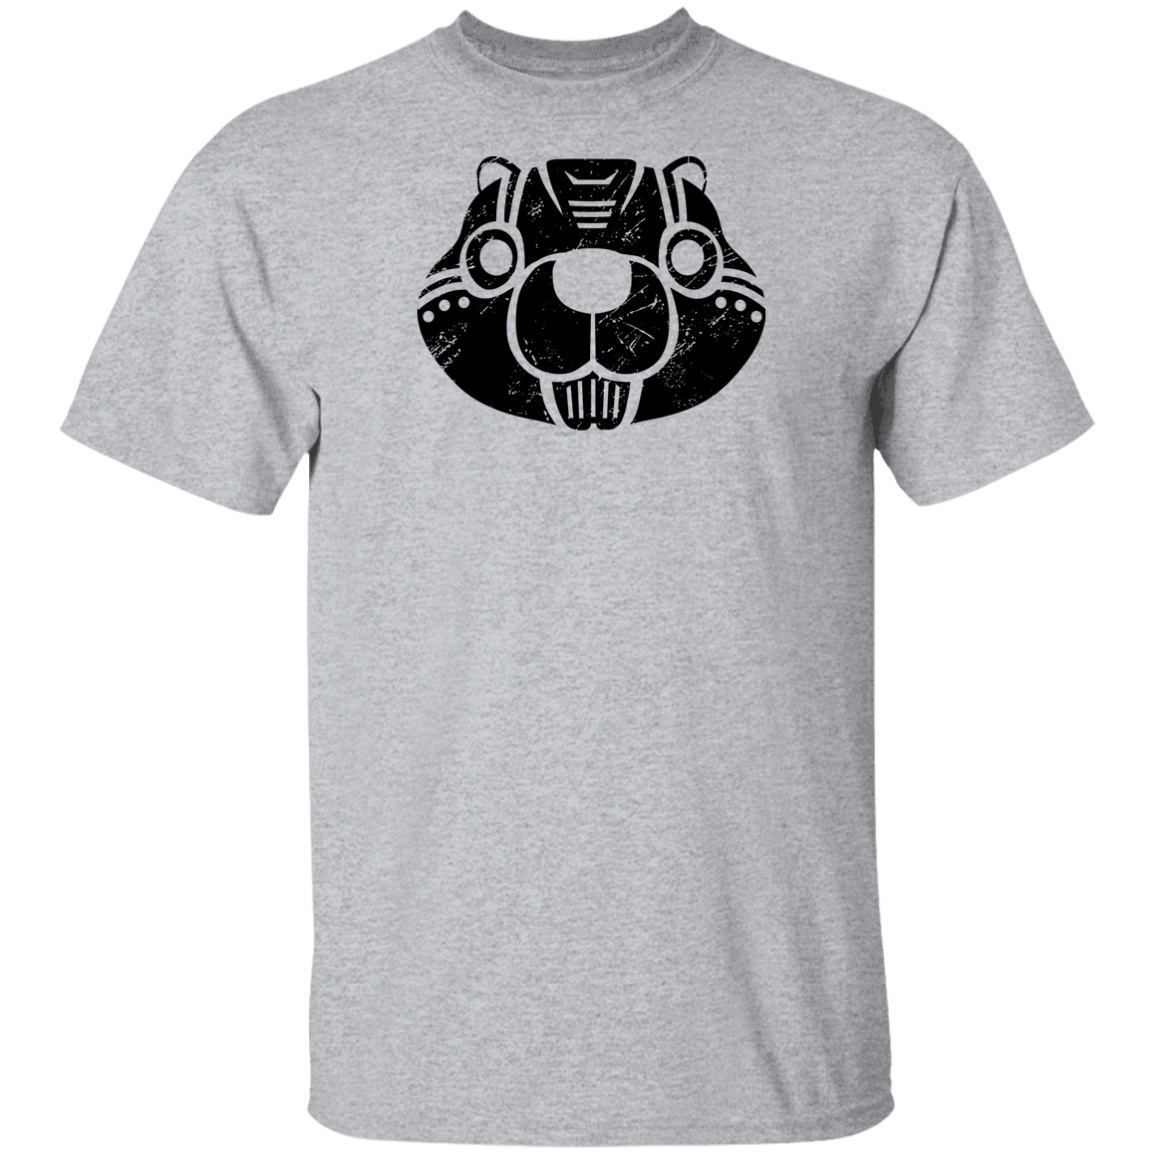 Black Distressed Emblem T-Shirt for Kids (Beaver/Buzzcut)